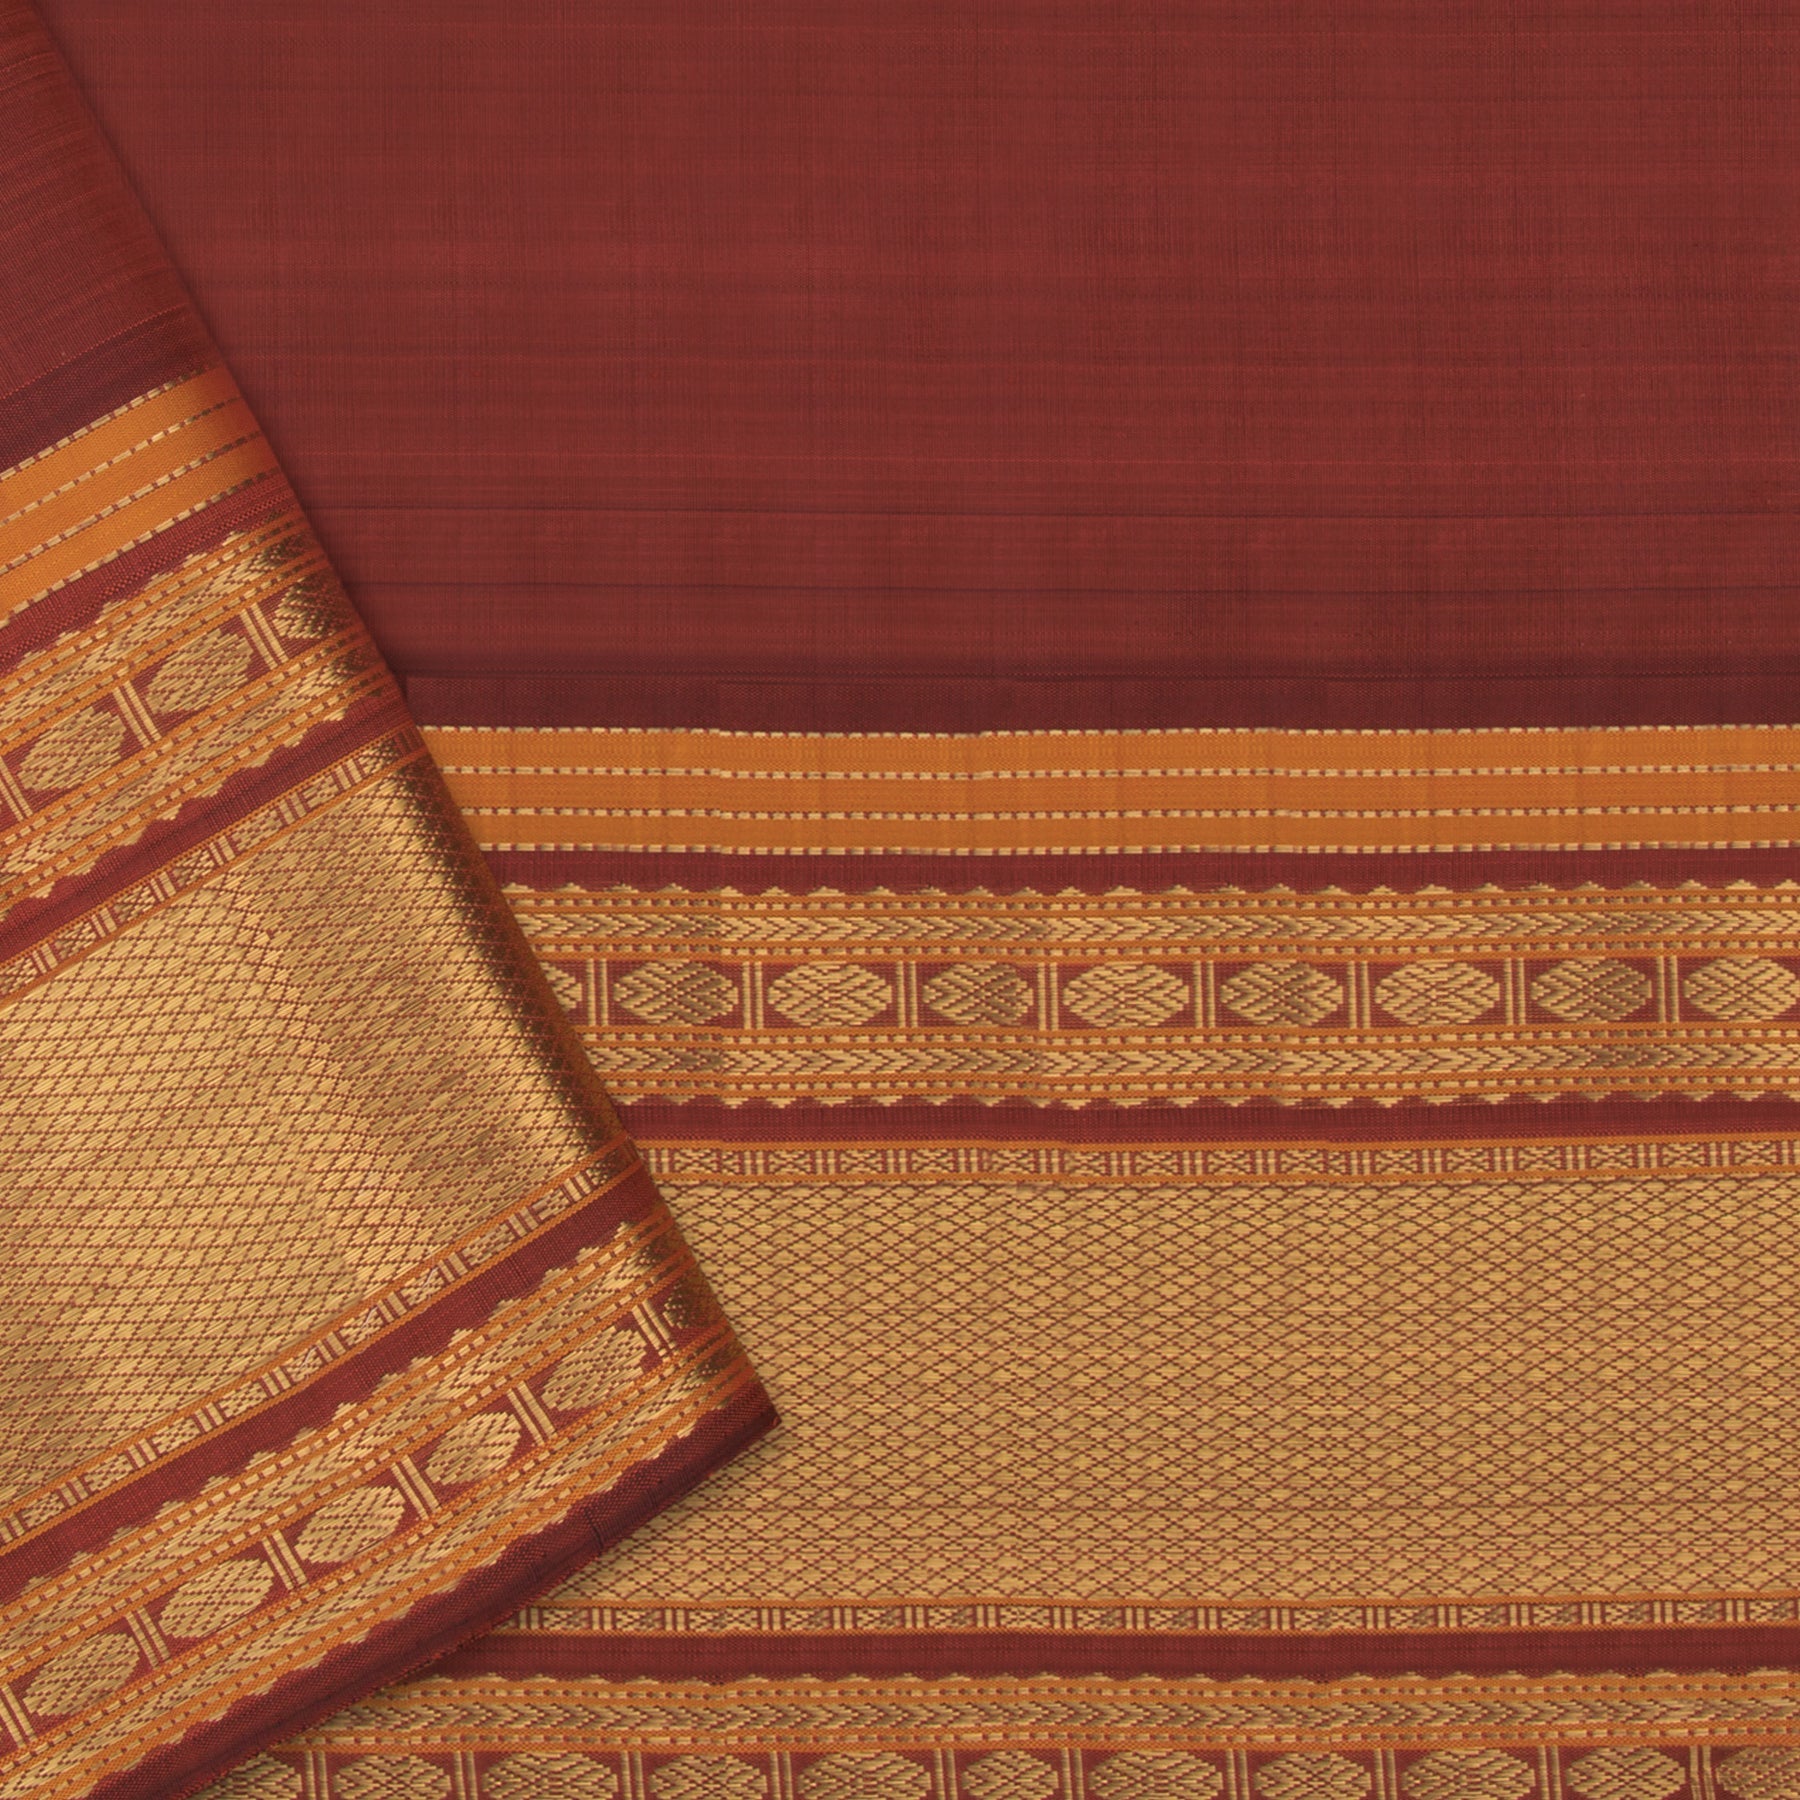 Kanakavalli Kanjivaram Silk Sari 21-040-HS001-01486 - Blouse View